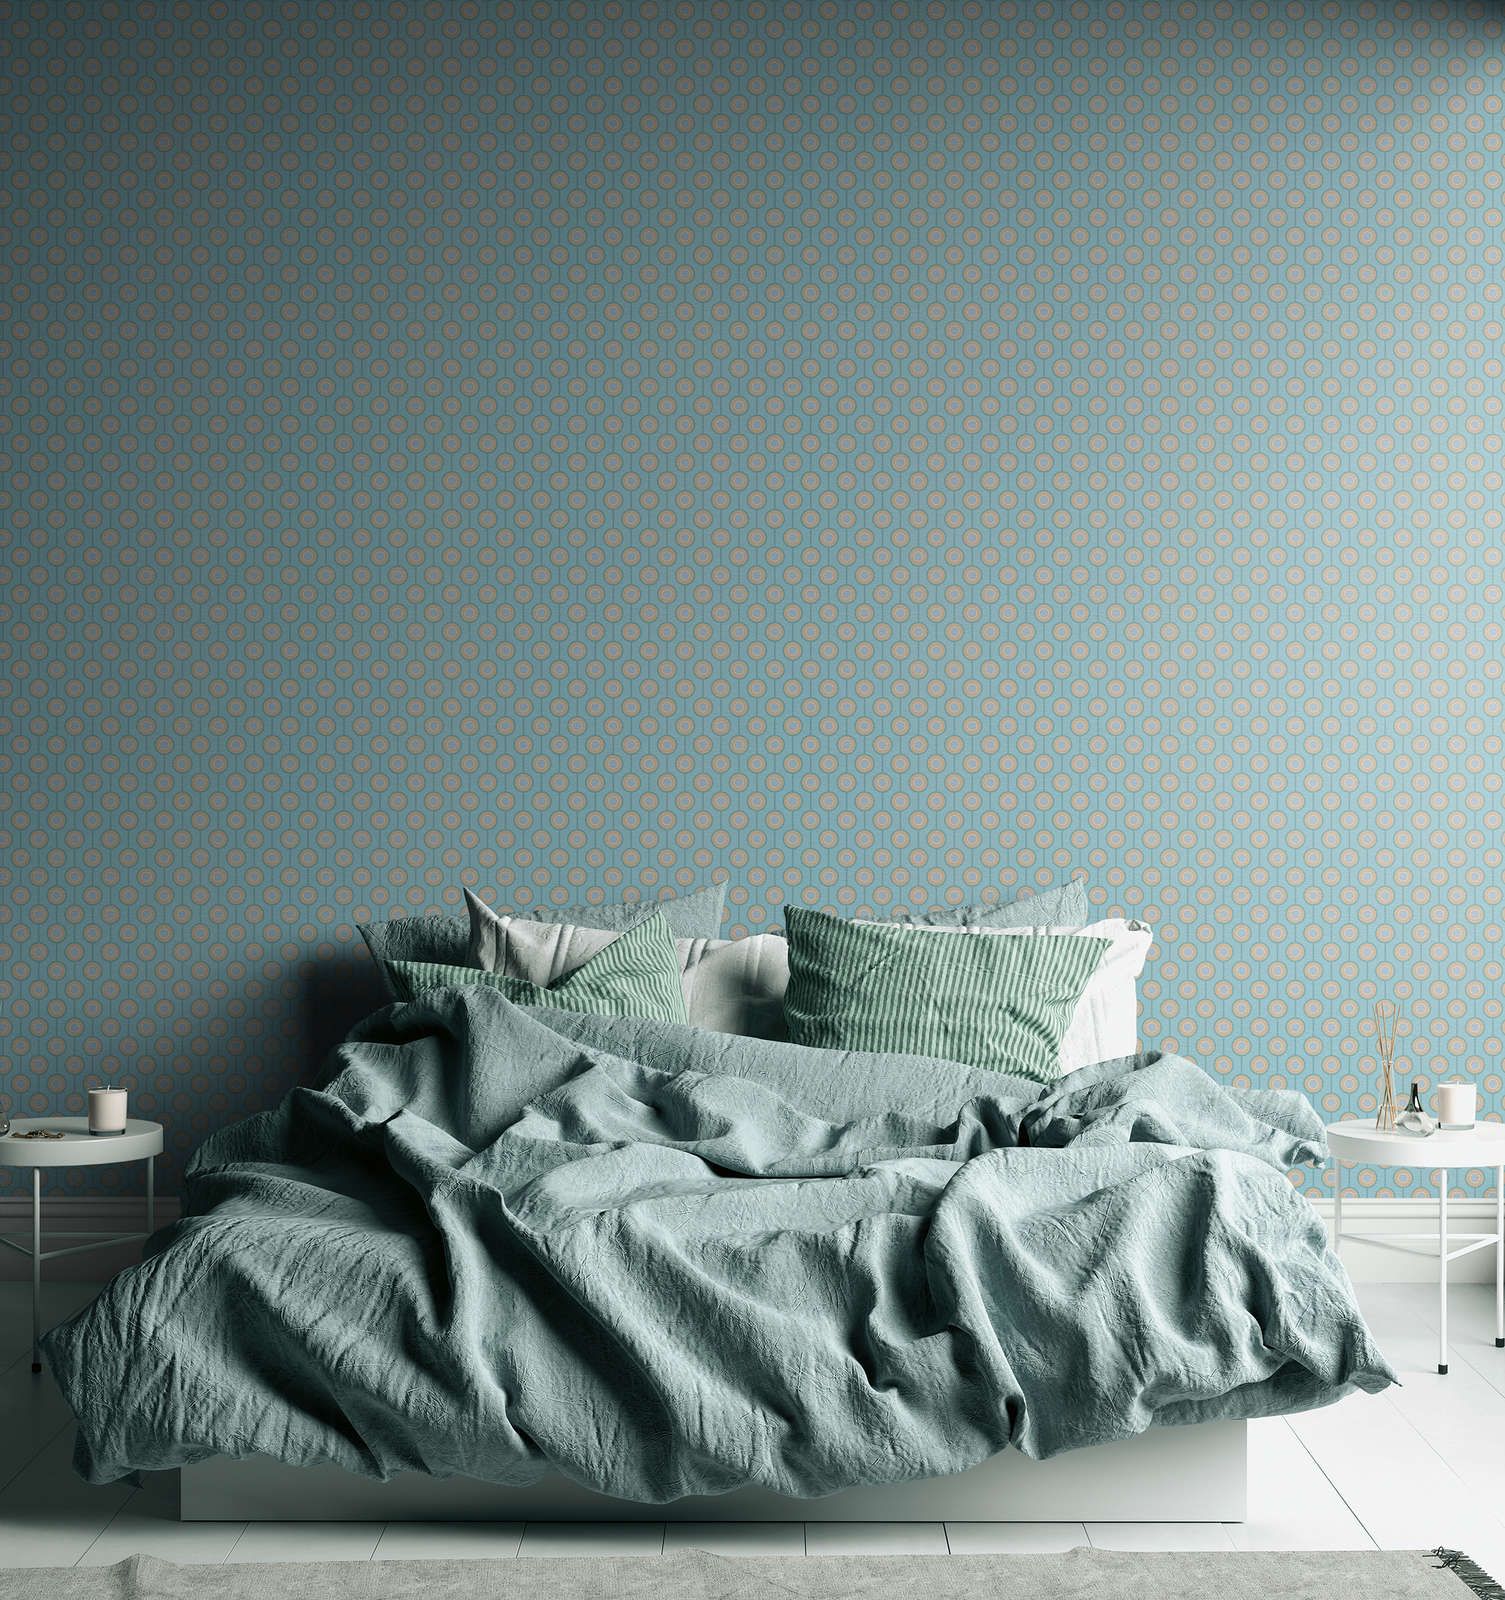             Papel pintado no tejido de textura ligera con motivos circulares retro - turquesa, azul, beige
        